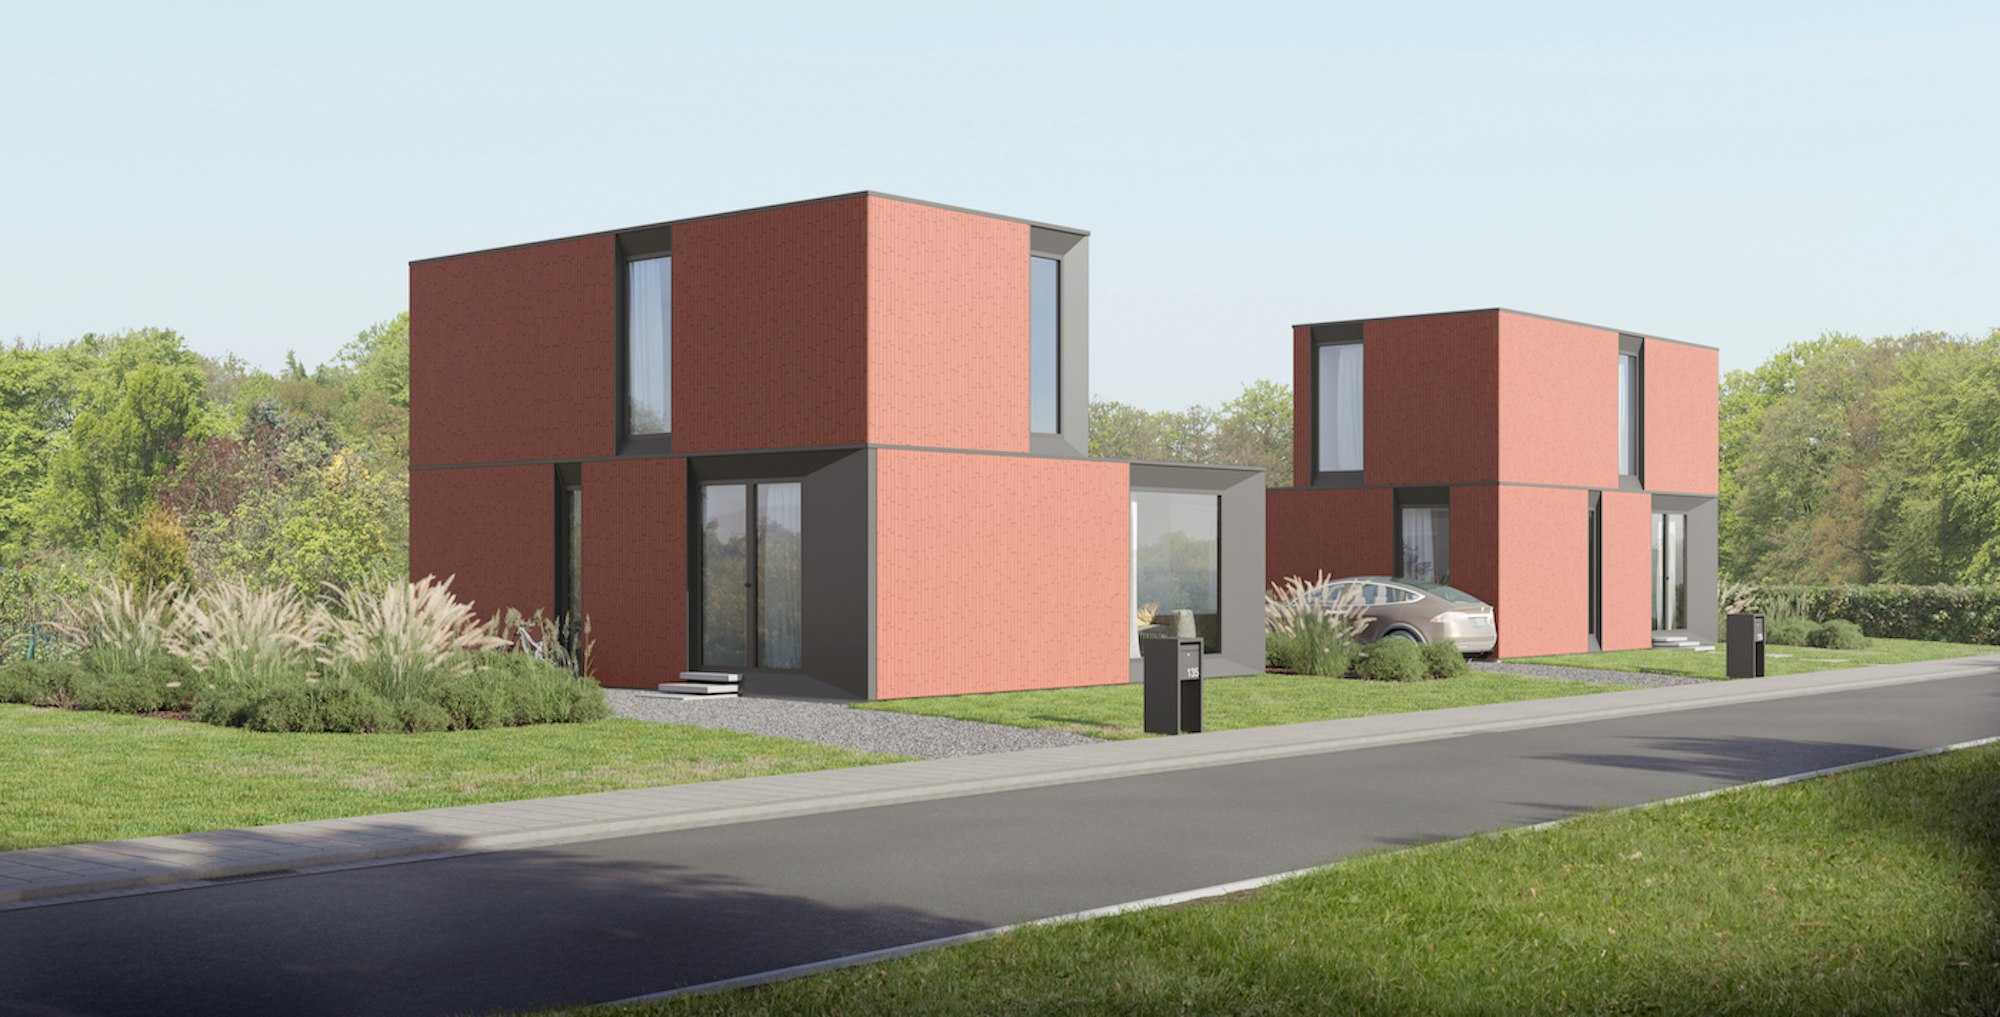 Skilpod #135 — houtskeletbouw woning met 3 slaapkamers, modern design in rode steen